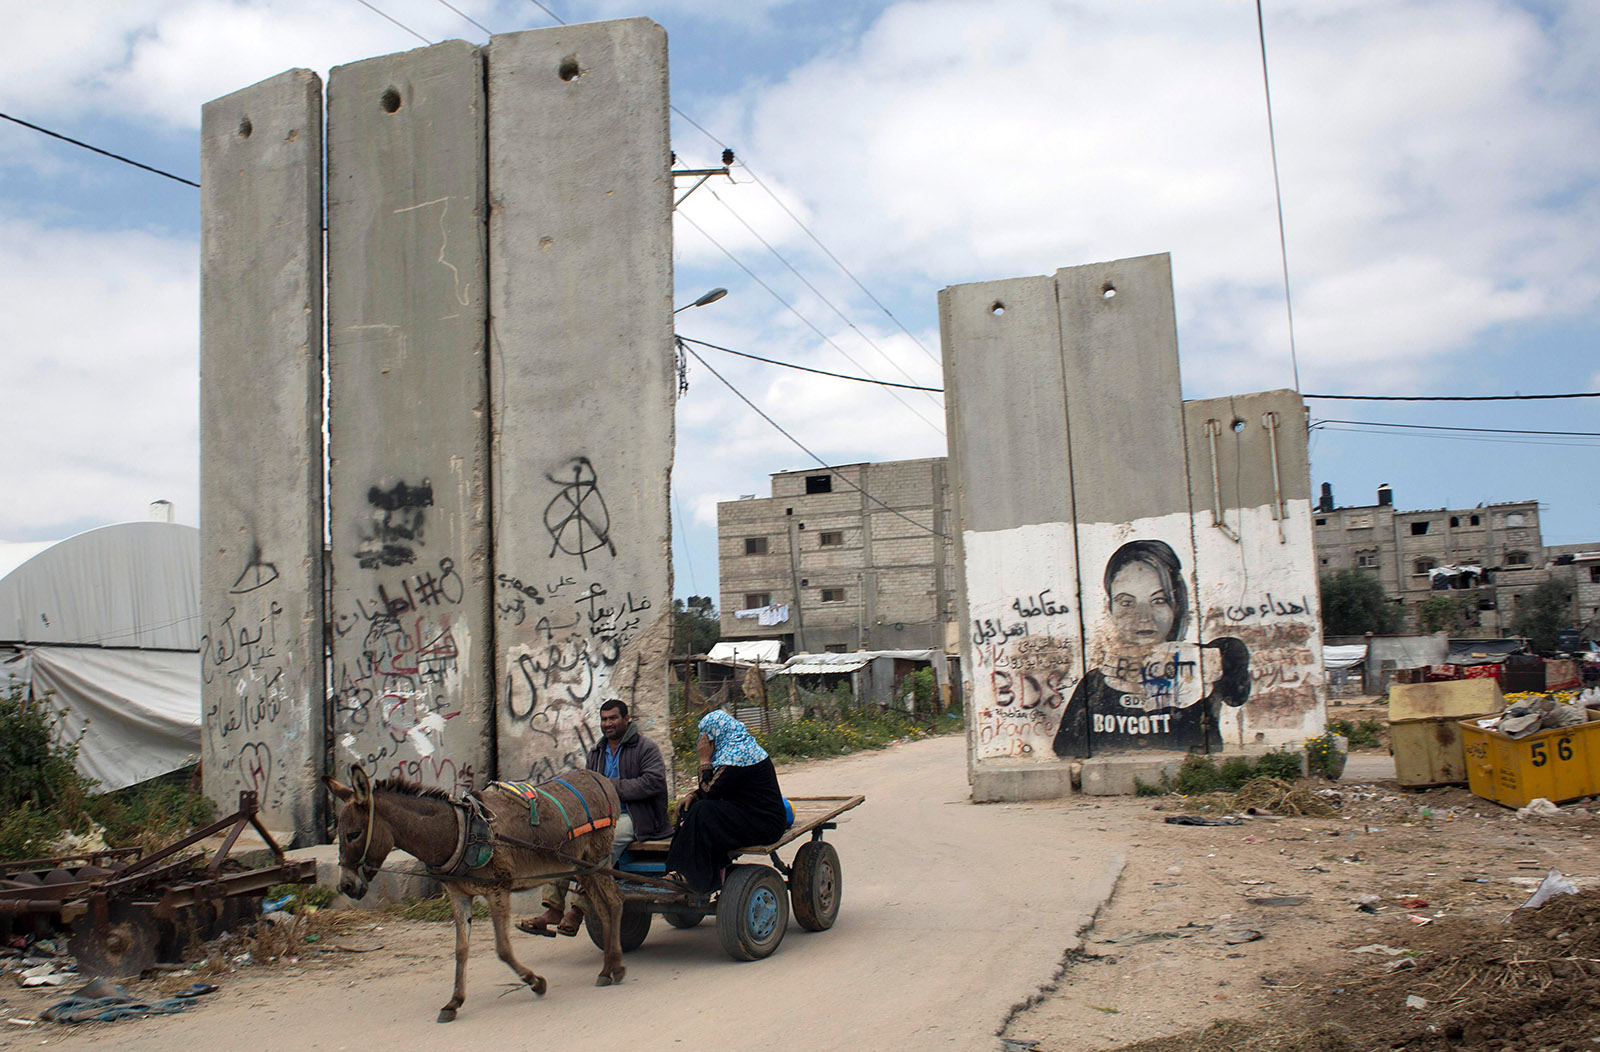 Palestinians riding a donkey-drawn cart past a mural calling for a boycott of Israel, Khan Yunis, Gaza Strip, 2016